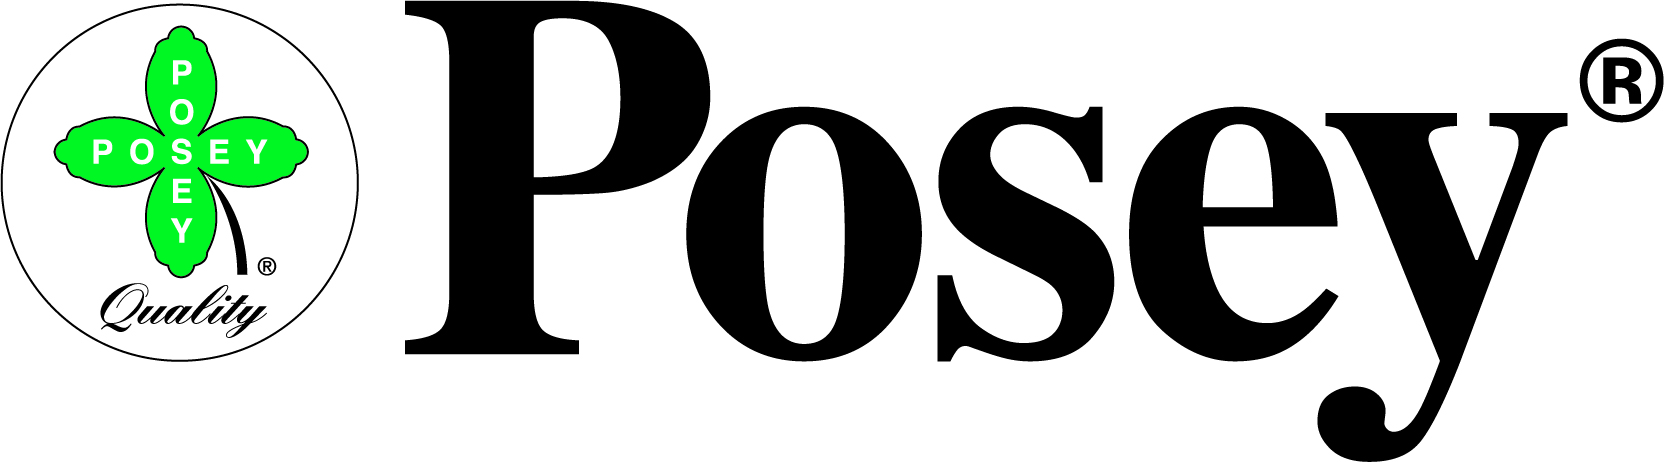 Posey_logo.jpg